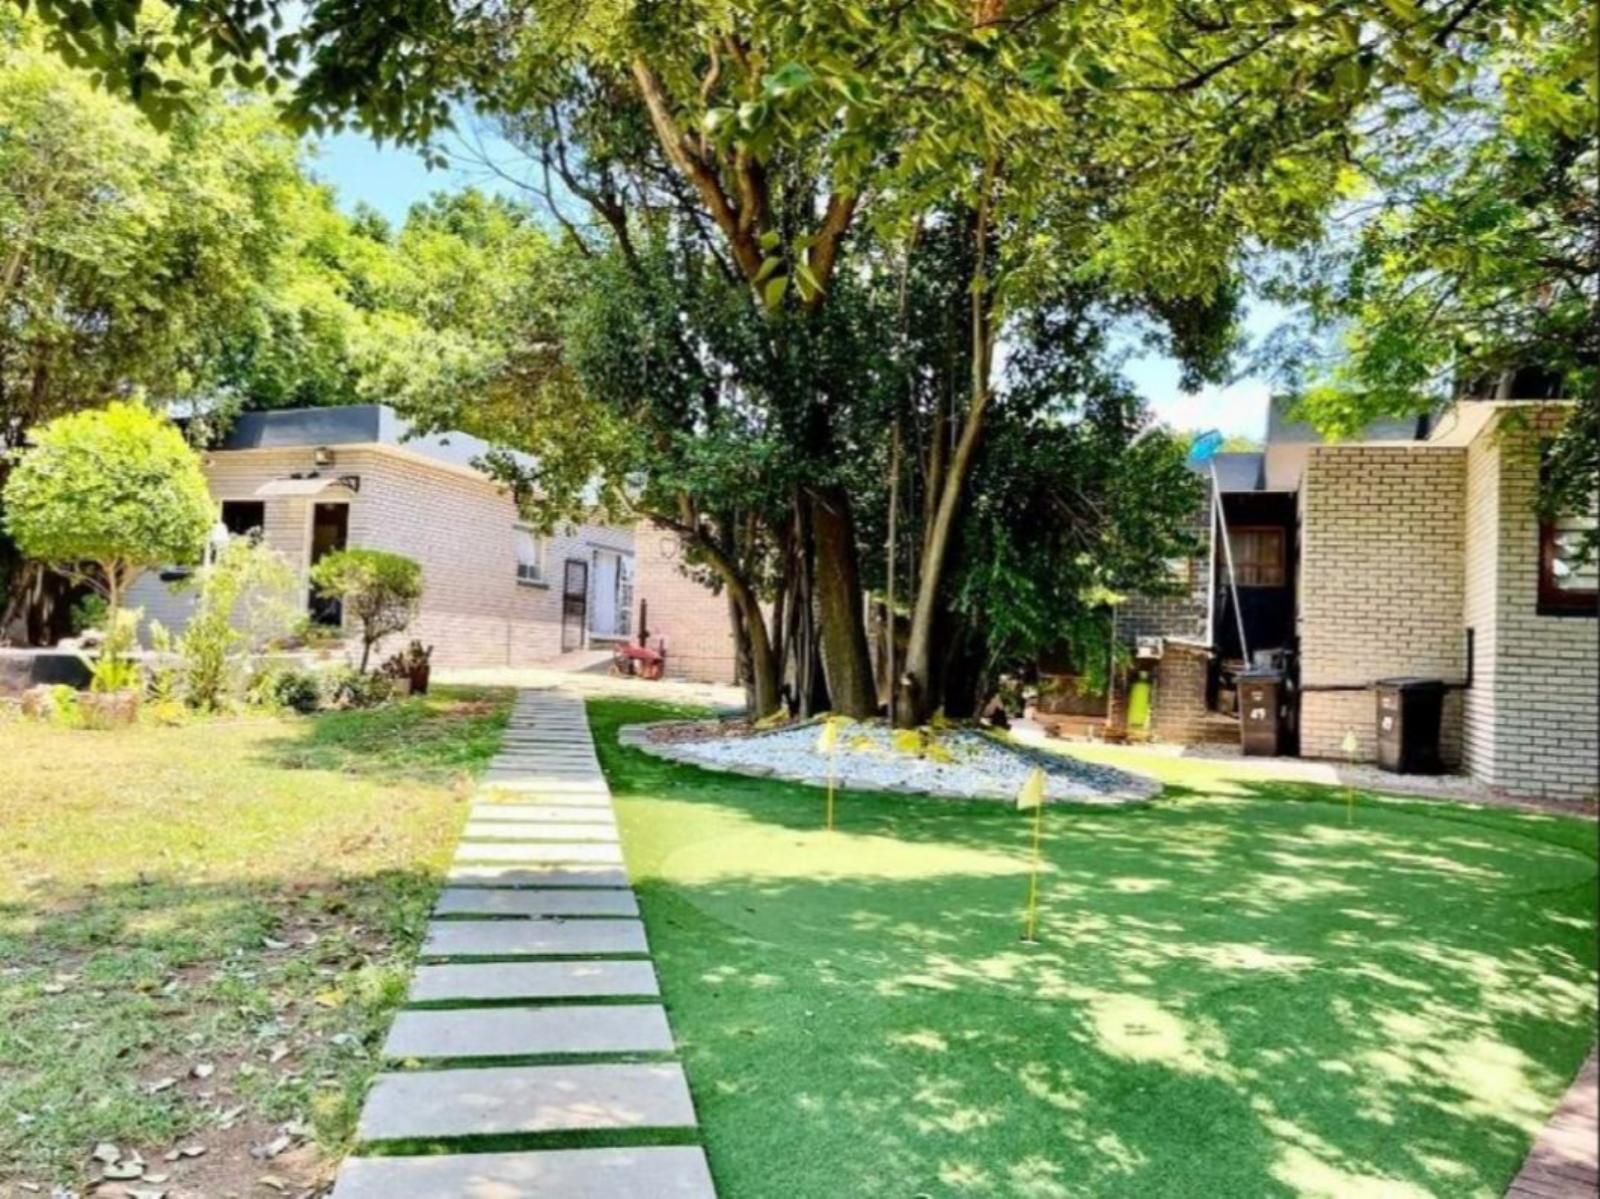 Fm Guest Lodge Randpark Ridge Johannesburg Gauteng South Africa House, Building, Architecture, Plant, Nature, Garden, Swimming Pool